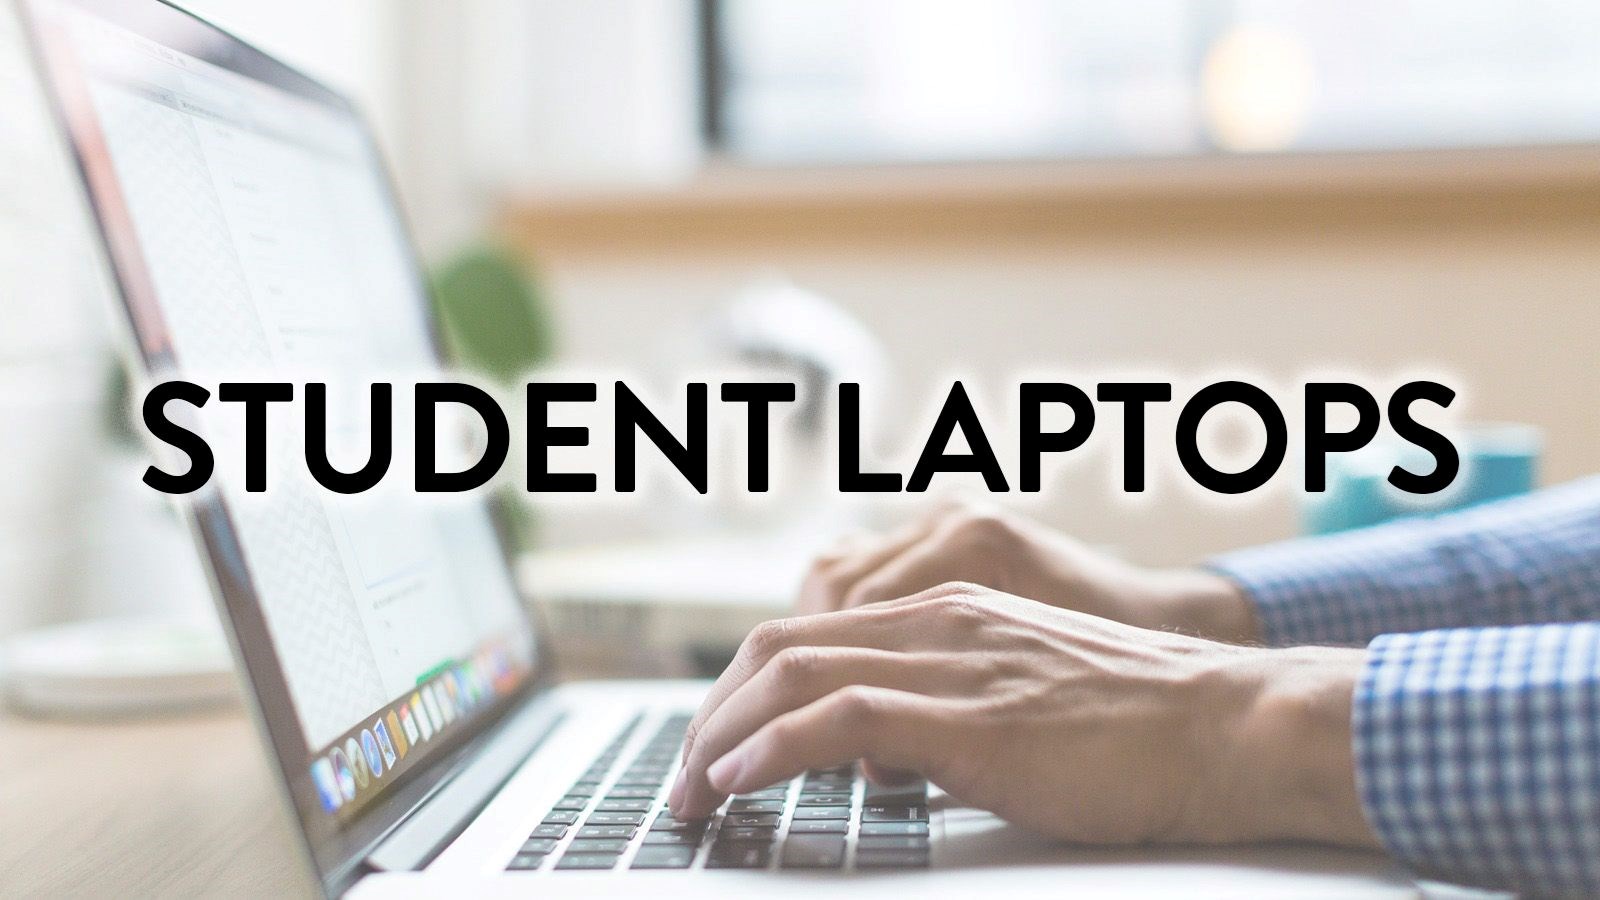 Student Laptops